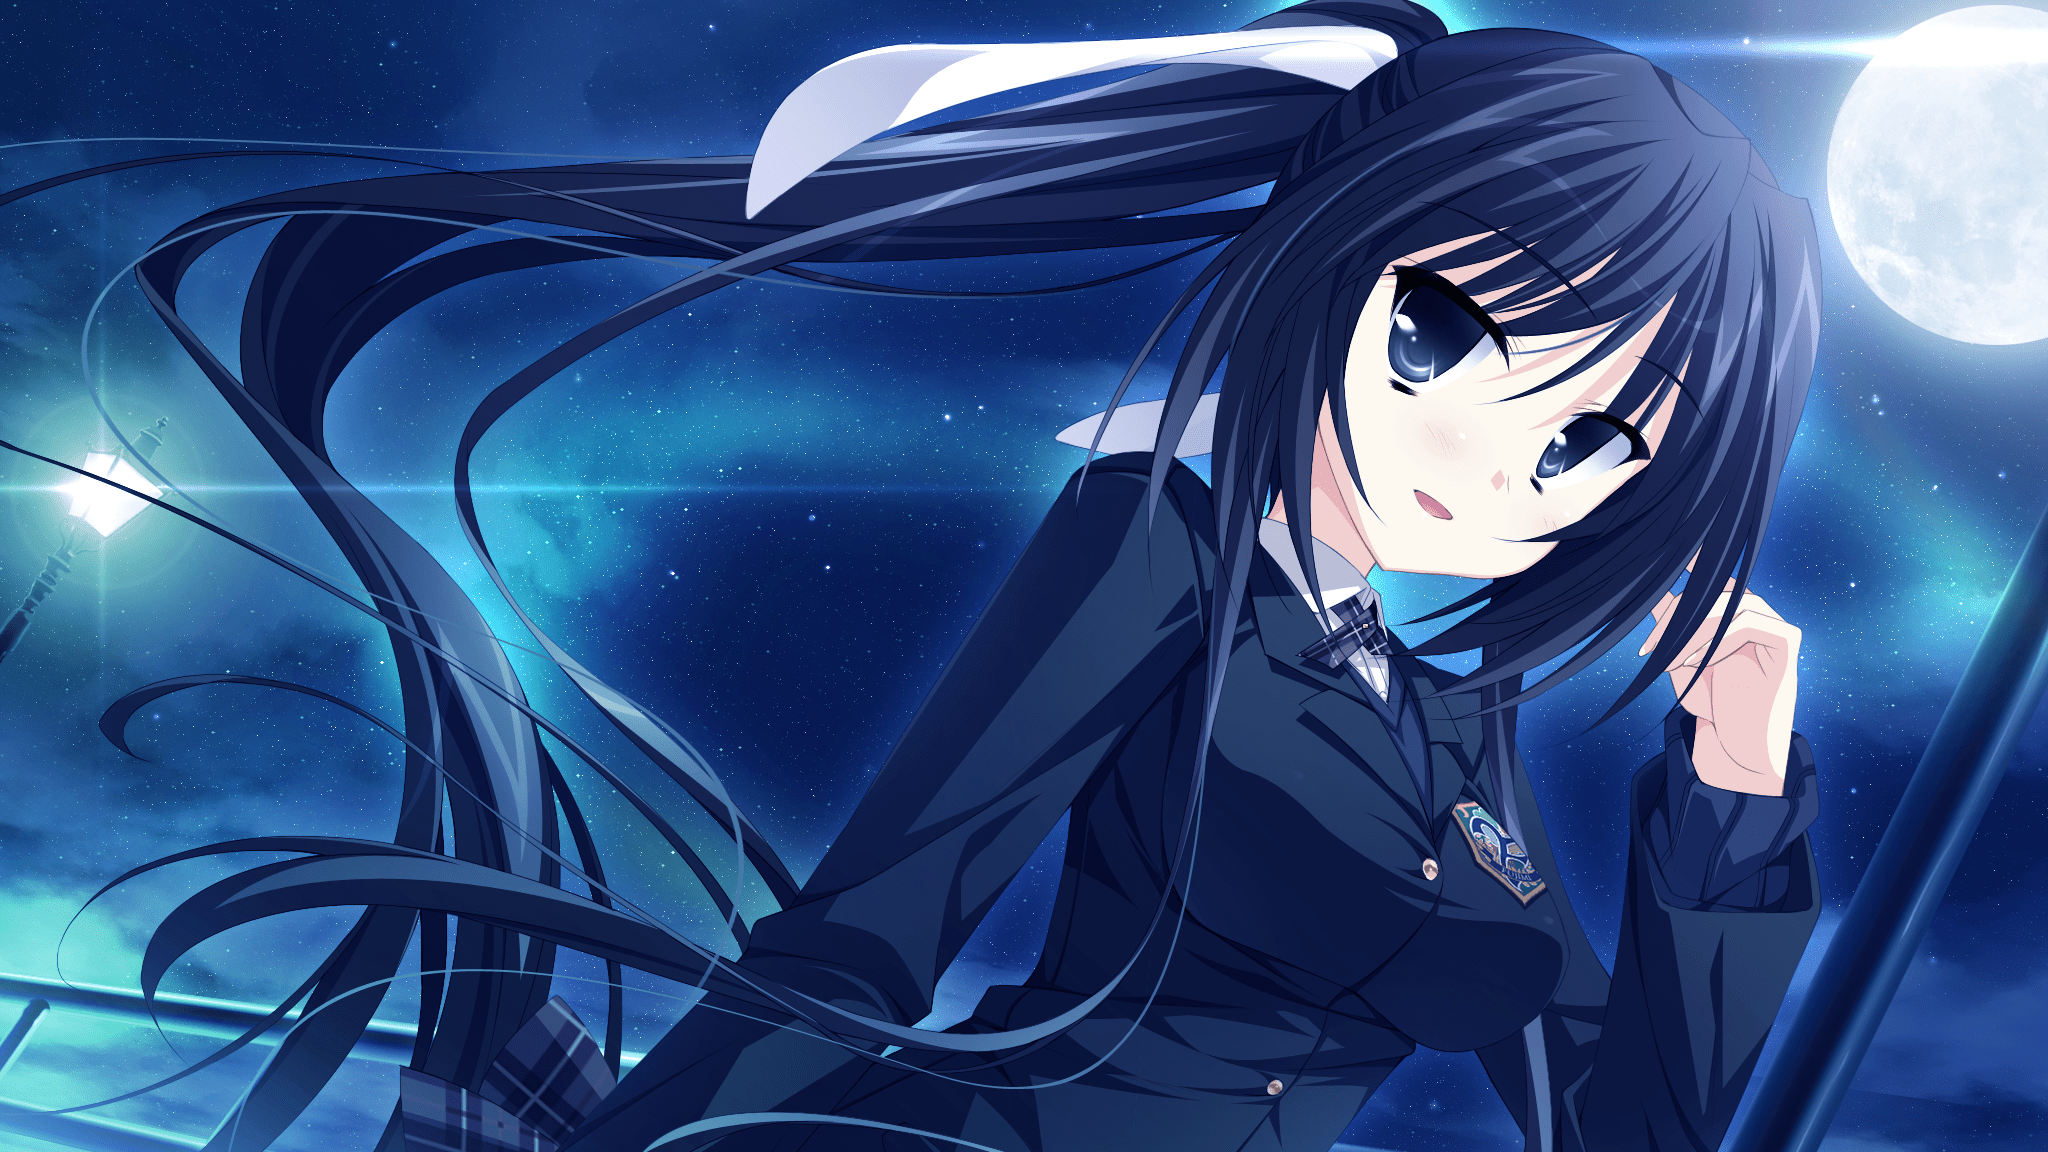 Anime girl with long black hair in a school uniform - 2048x1152